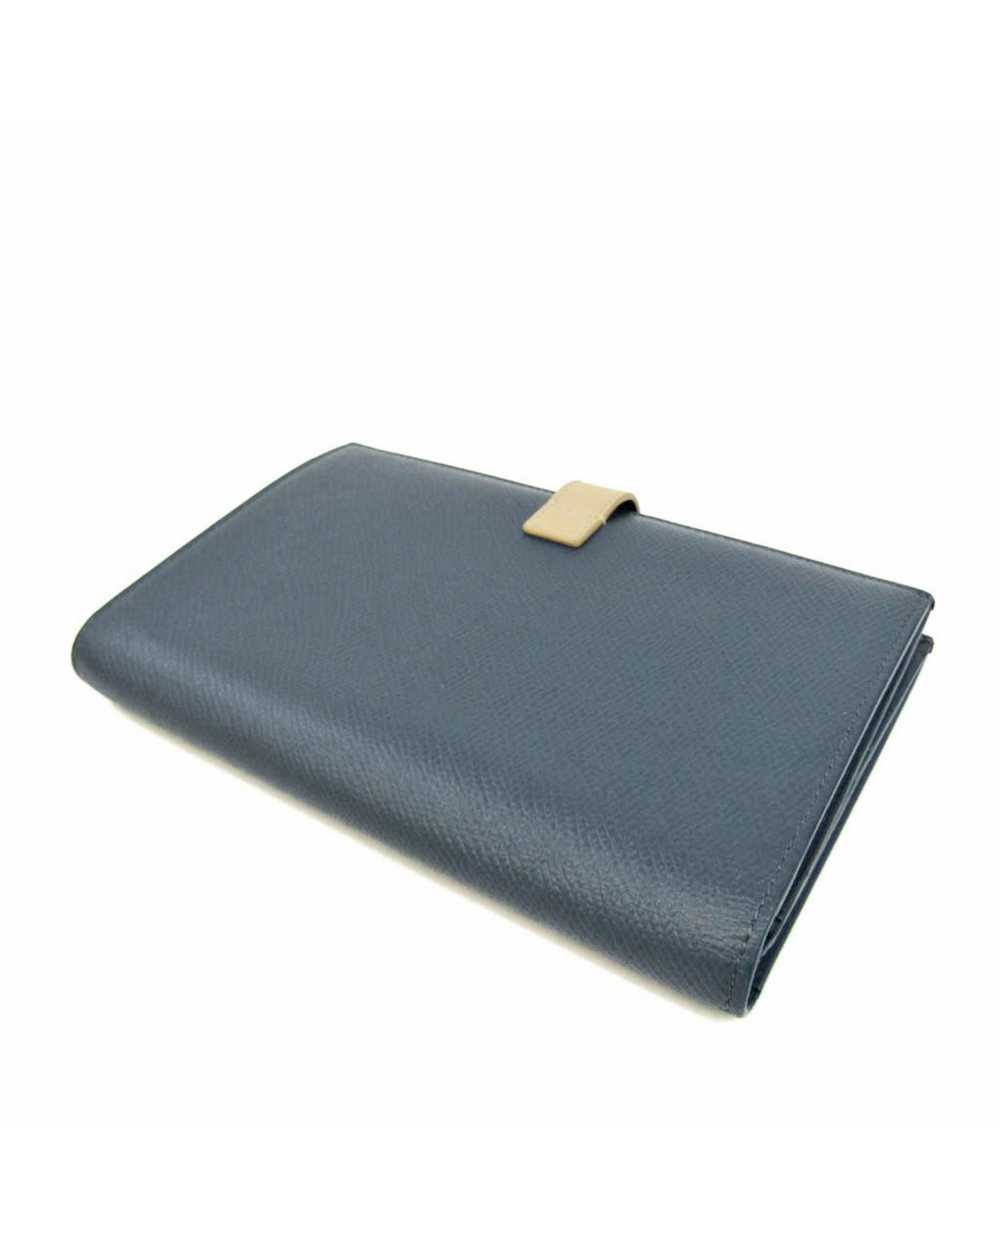 Celine Navy Leather Wallet - Practical and Elegant - image 2